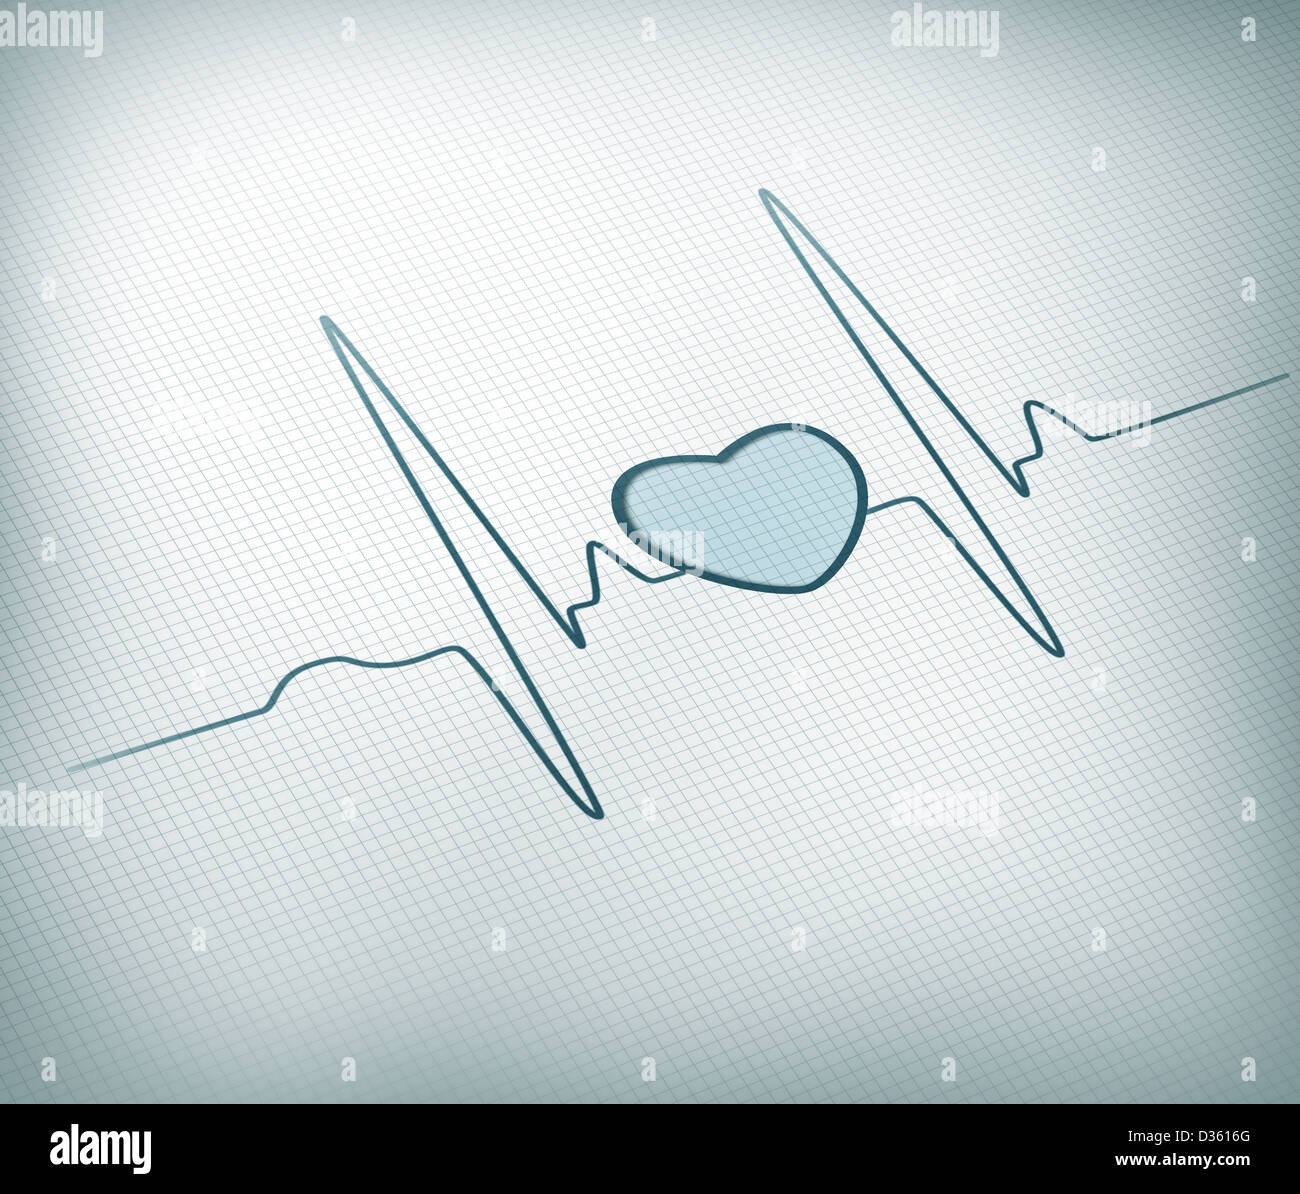 Petrol / ECG-Linie mit gesunden Herzen Grafik Stockfoto